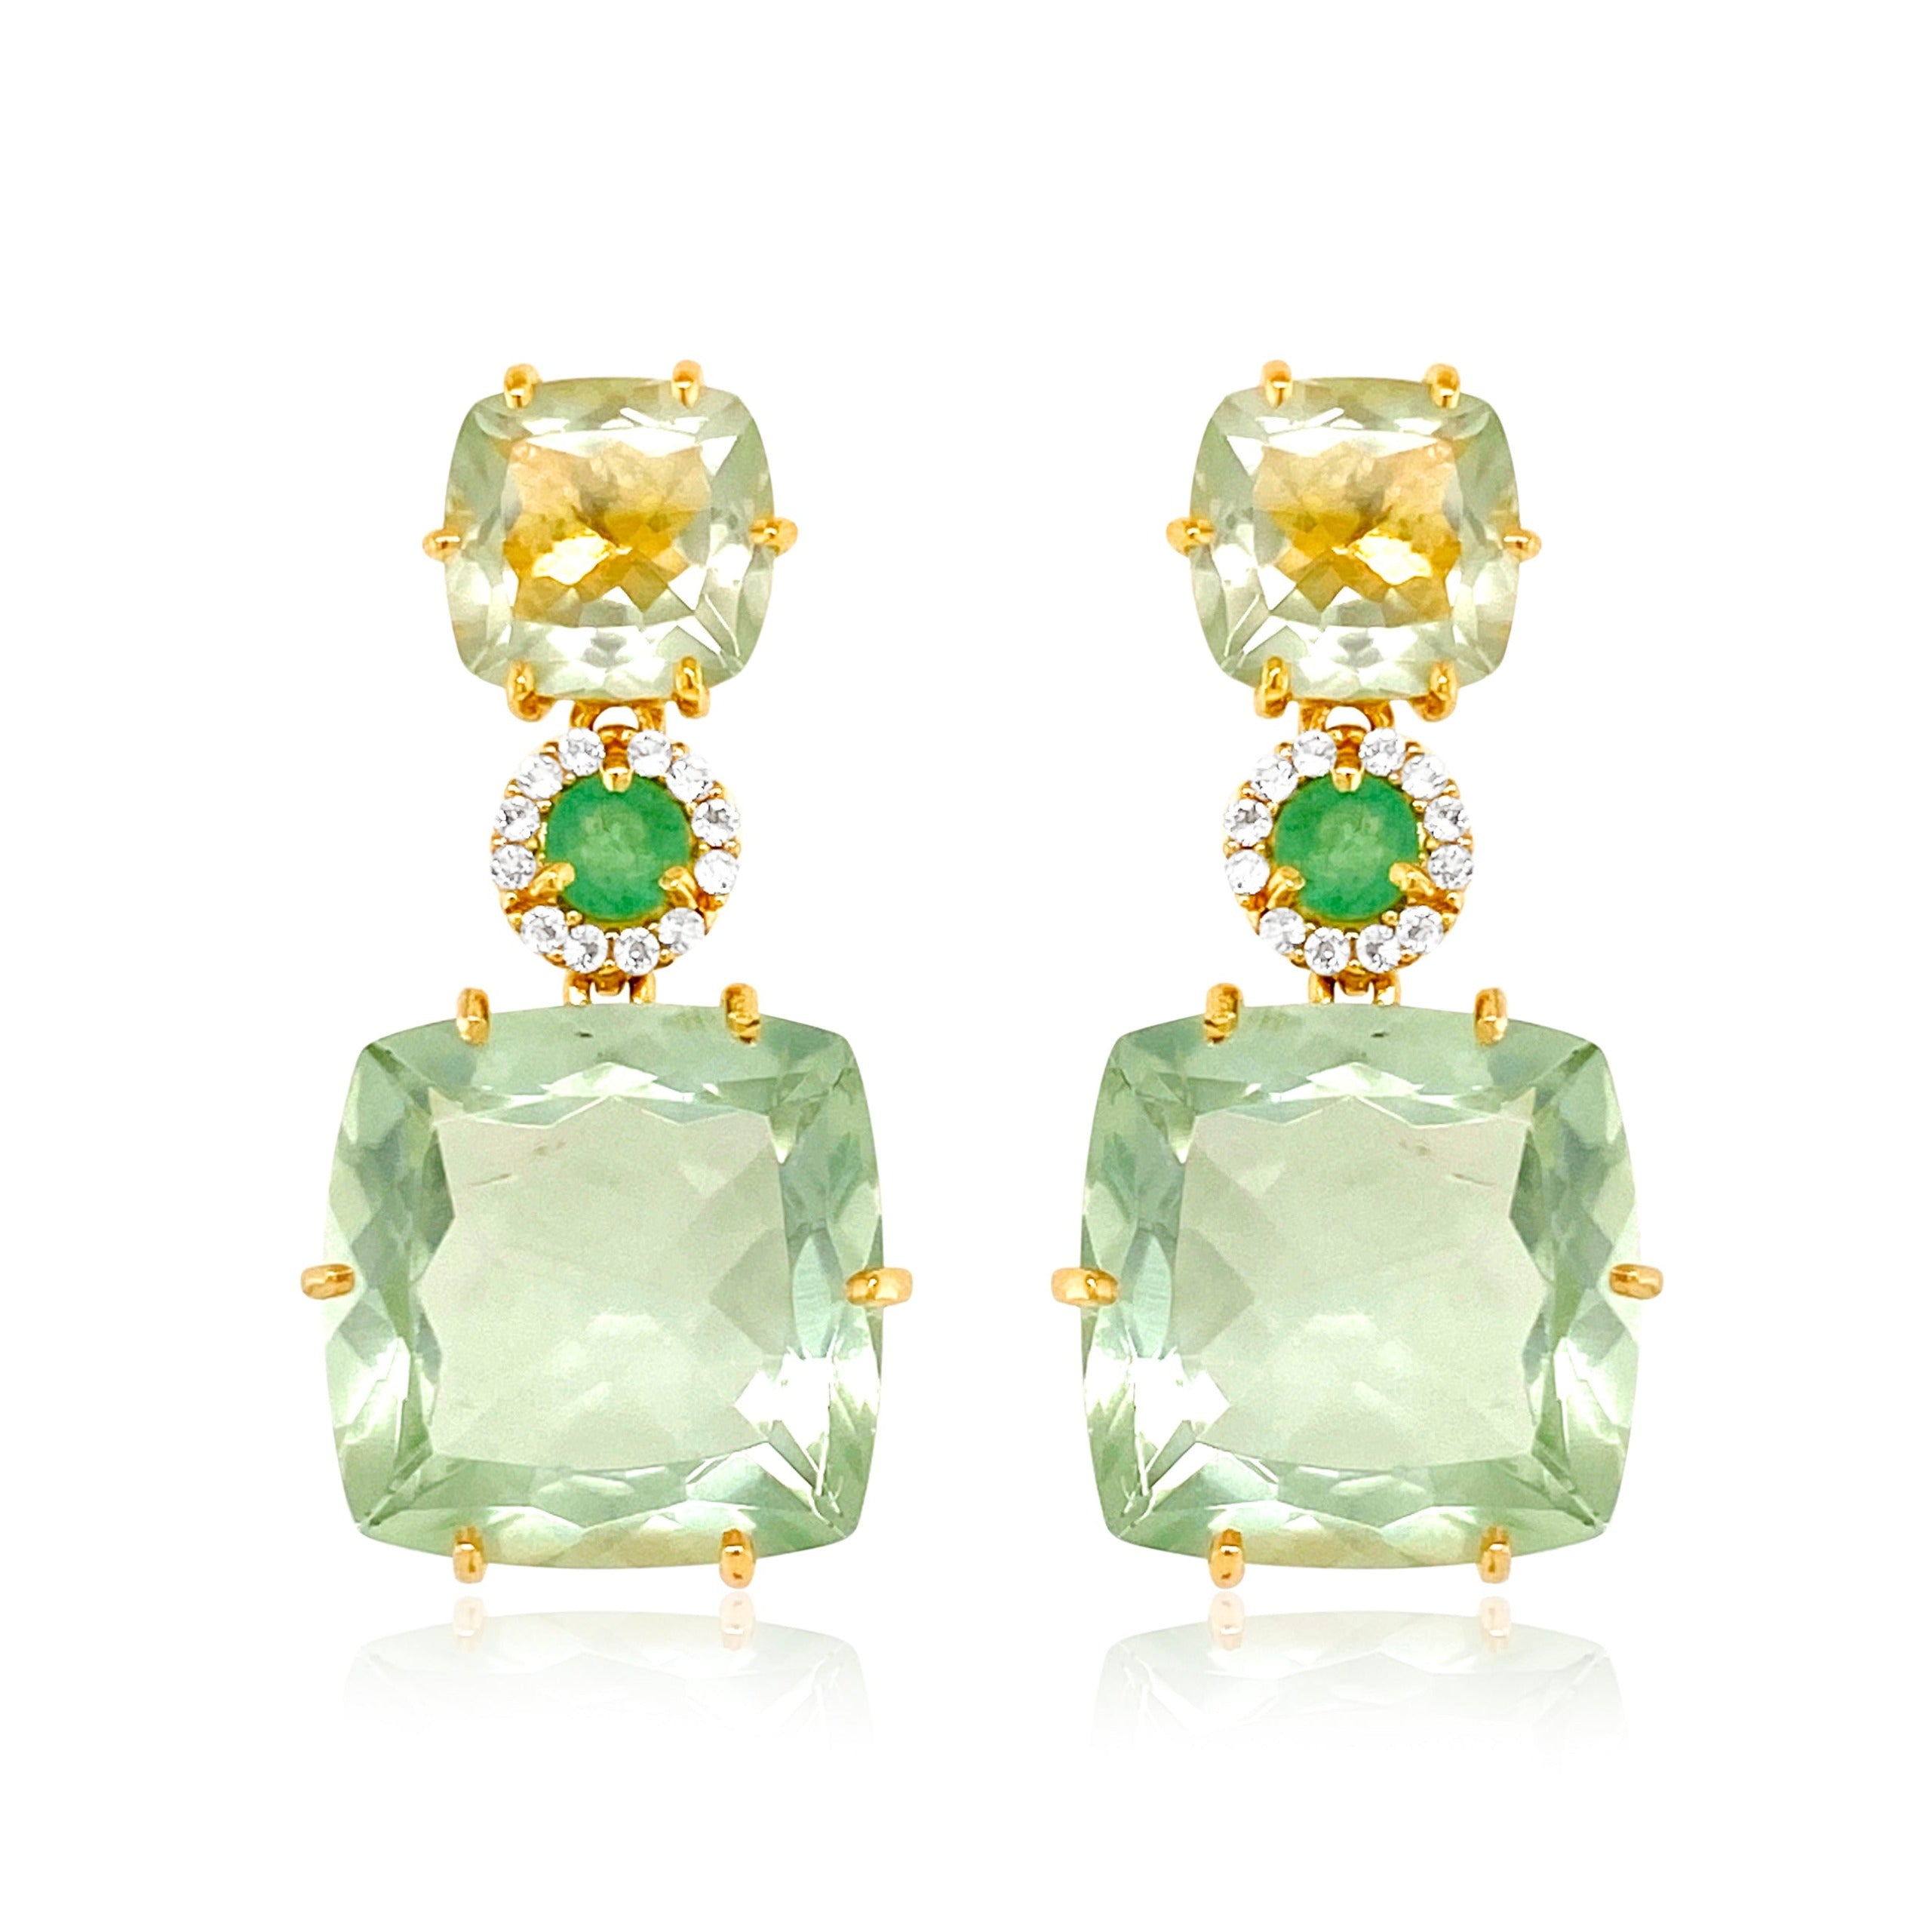 DEUX Earrings (1145) - Praziolite, Green Quartz / YG